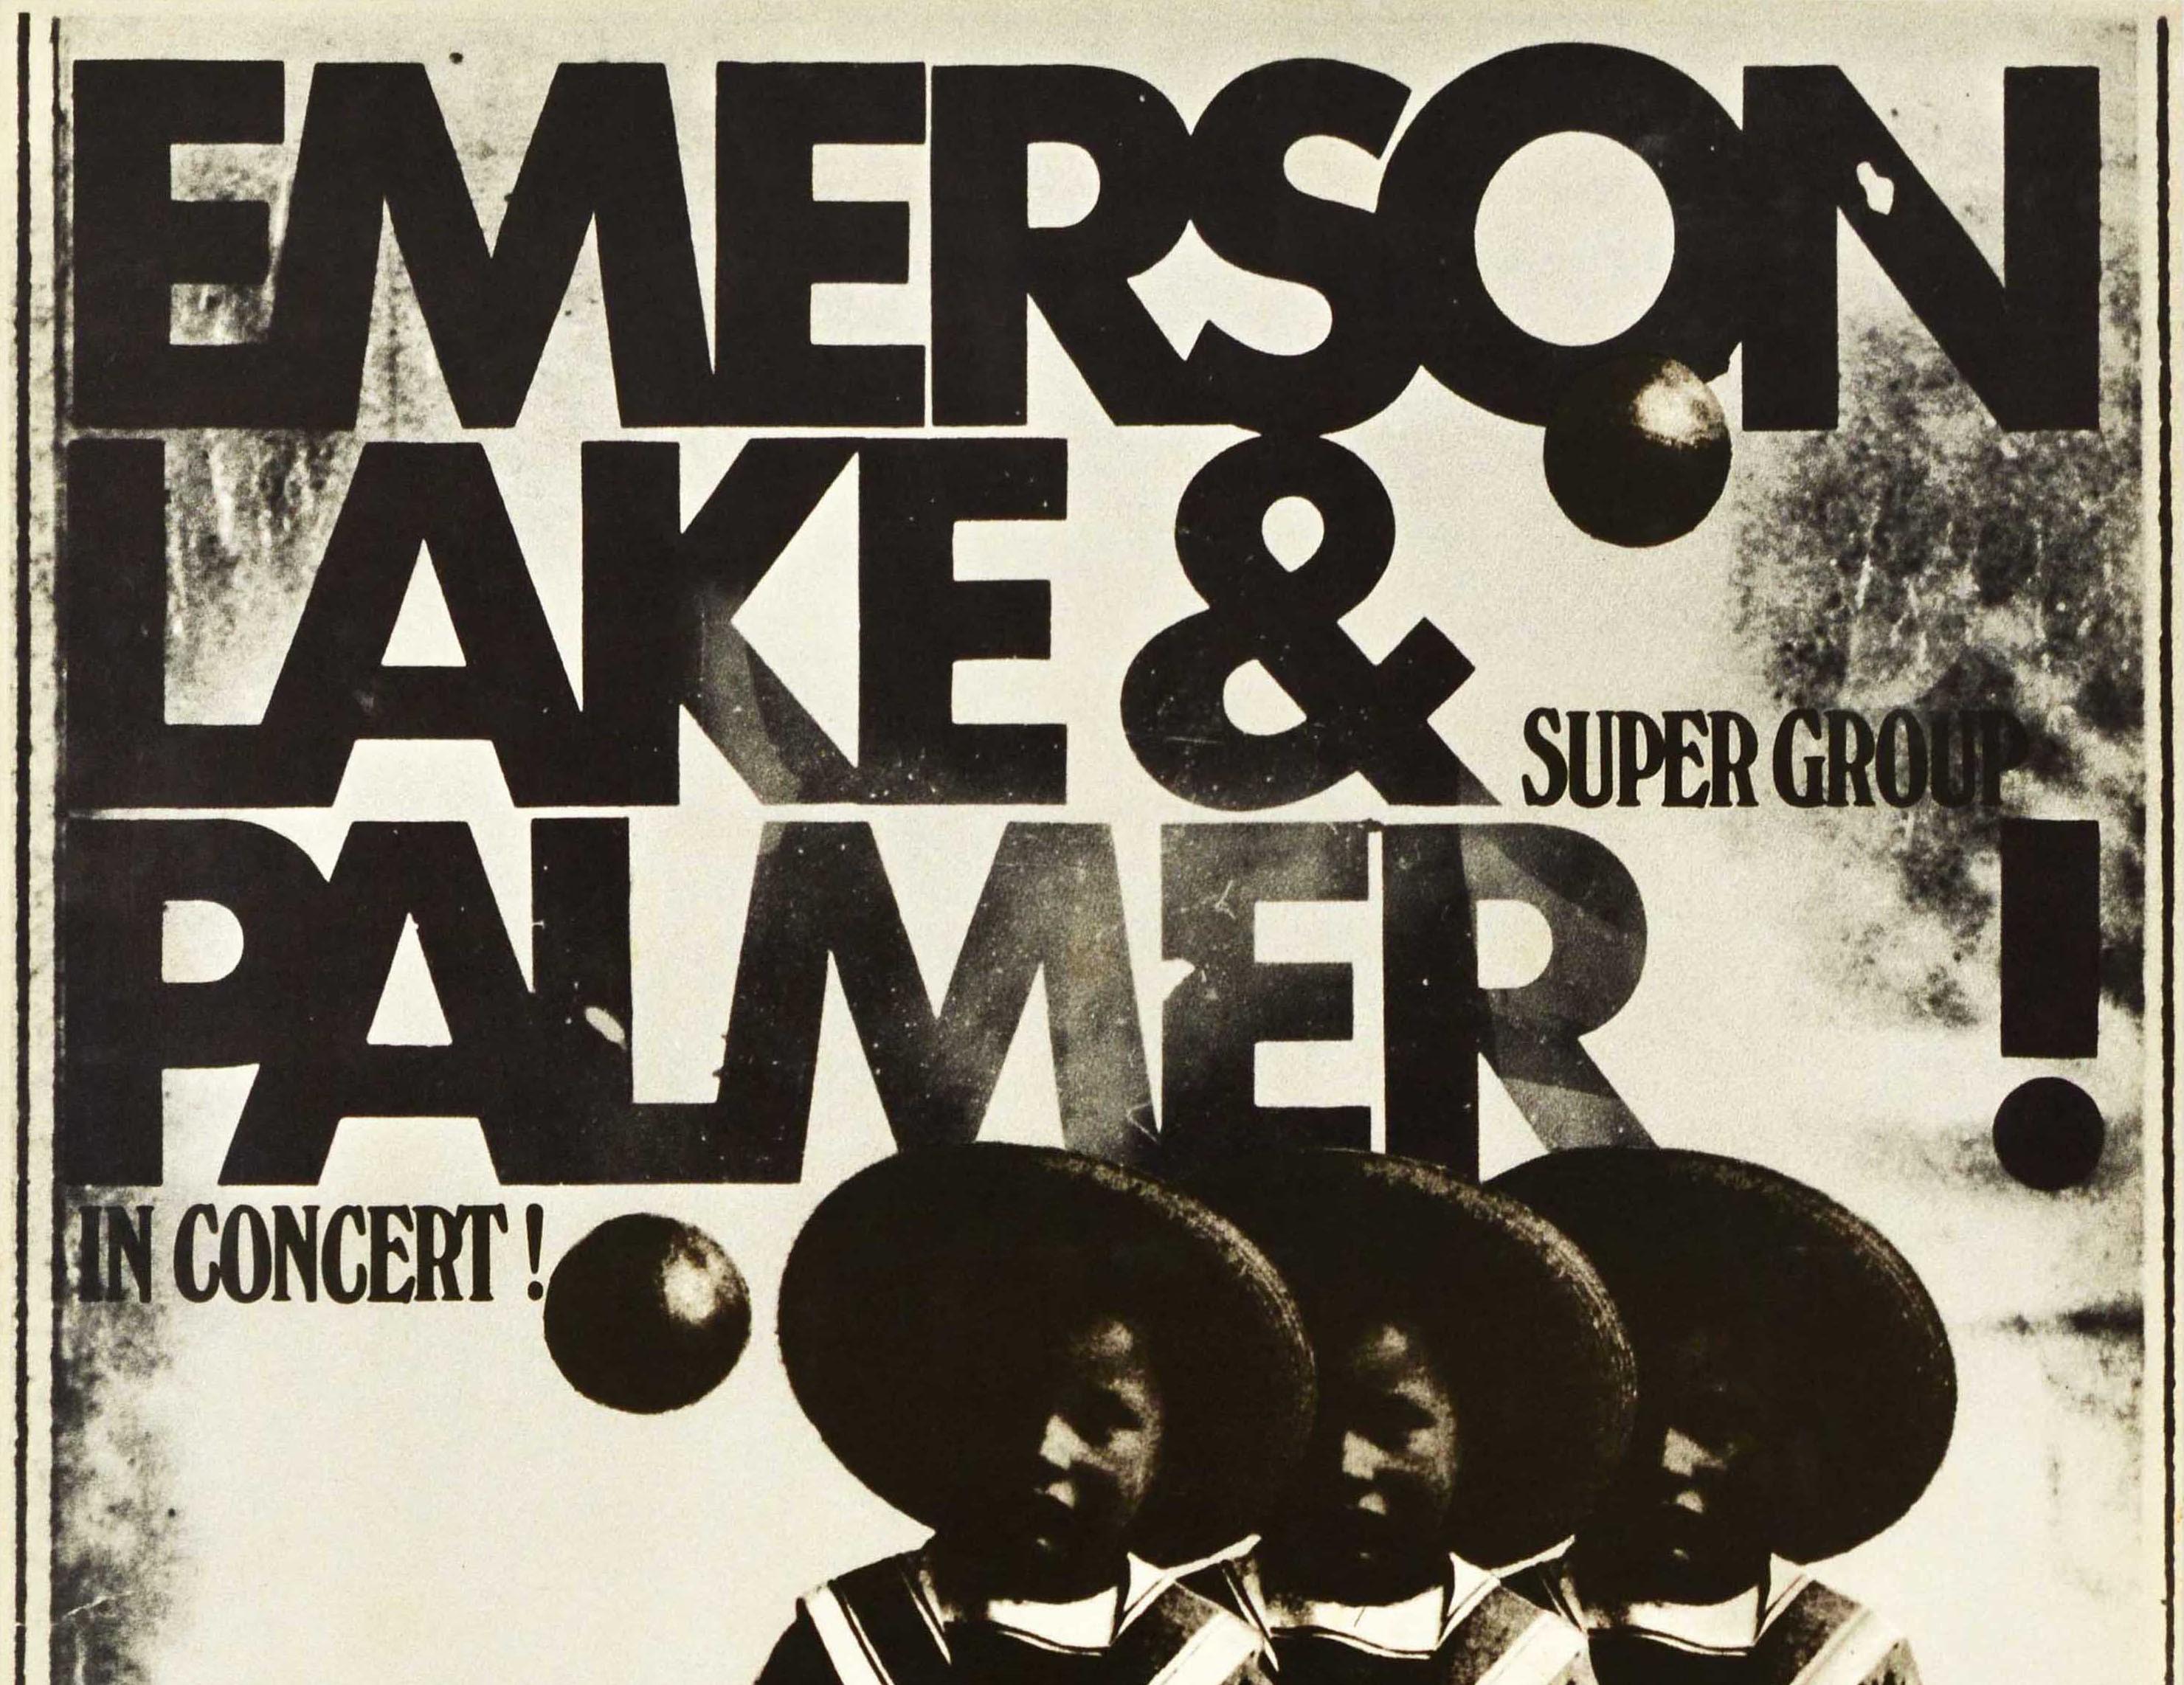 Original Vintage Music Concert Poster Emerson Lake & Palmer Super Group Art Rock - Print by Günther Kieser